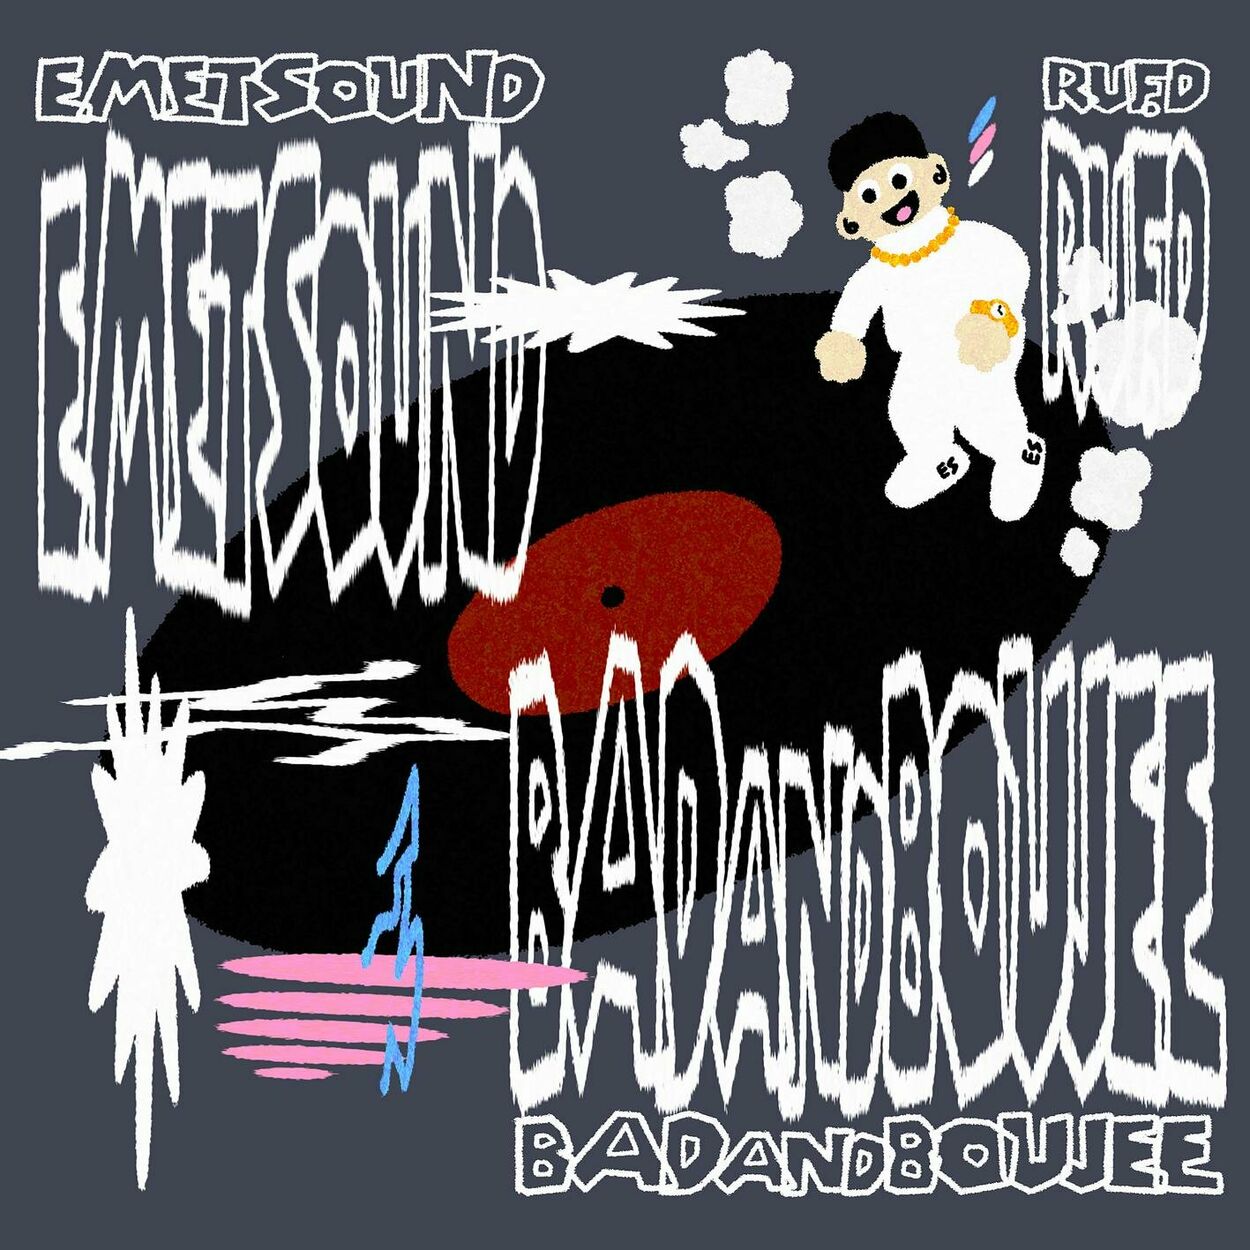 Emetsound – Bad and Woo Ah (feat. Ruf.d) – Single